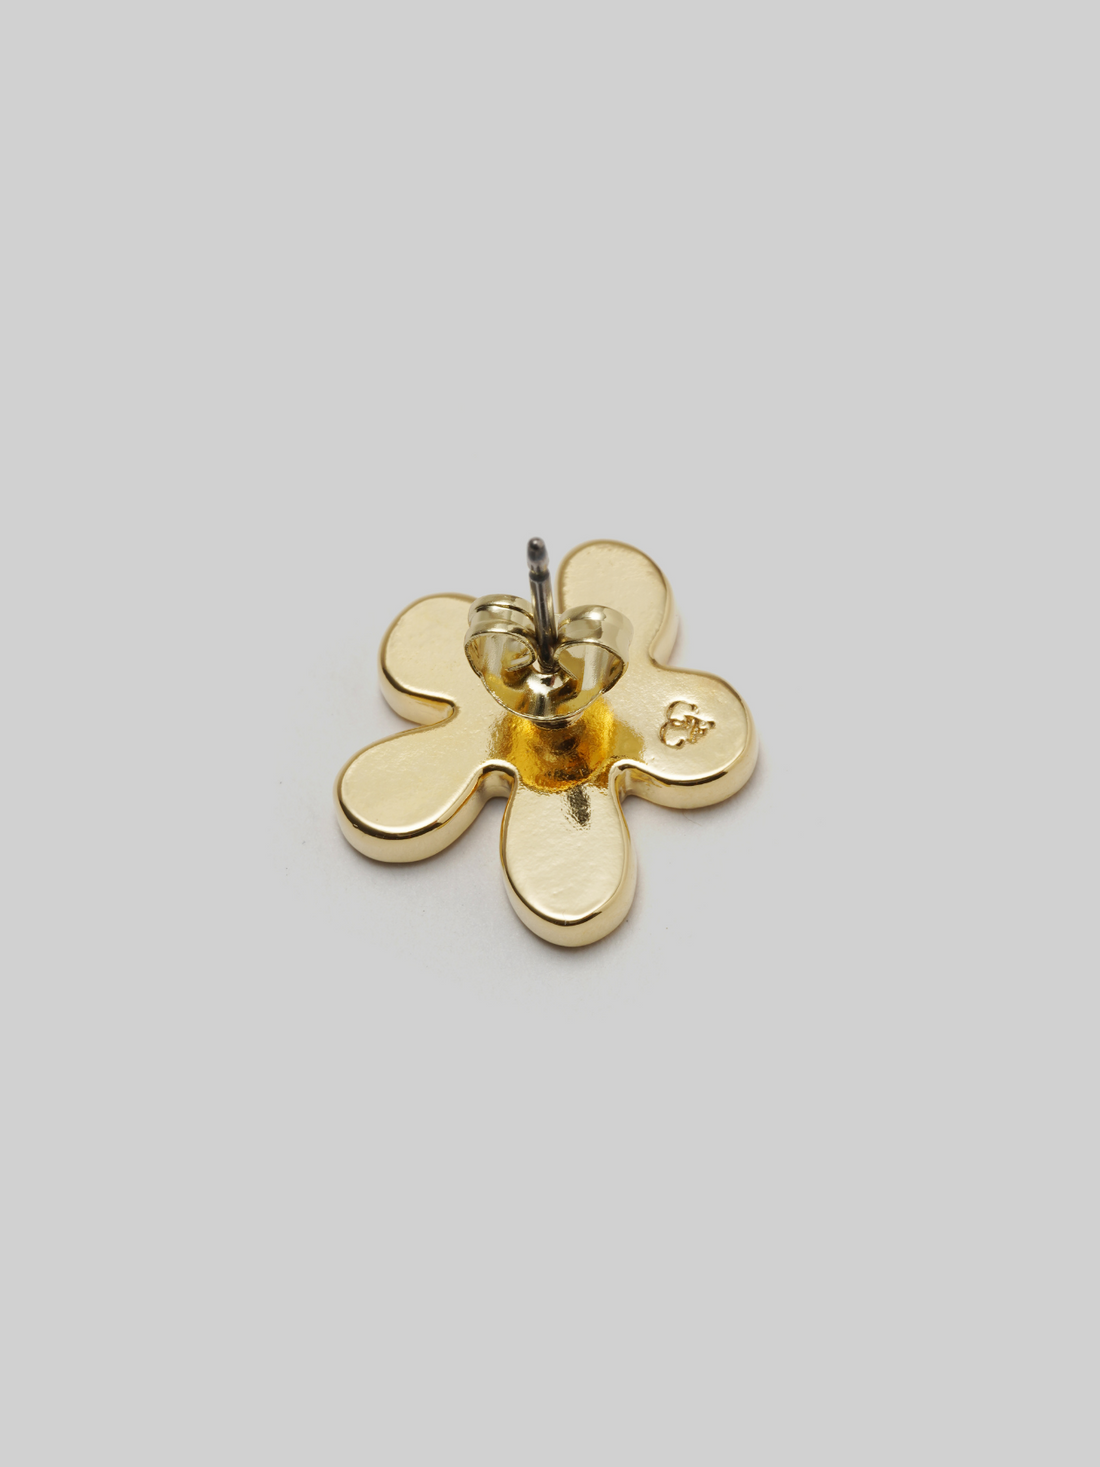 Eve's flower pierce